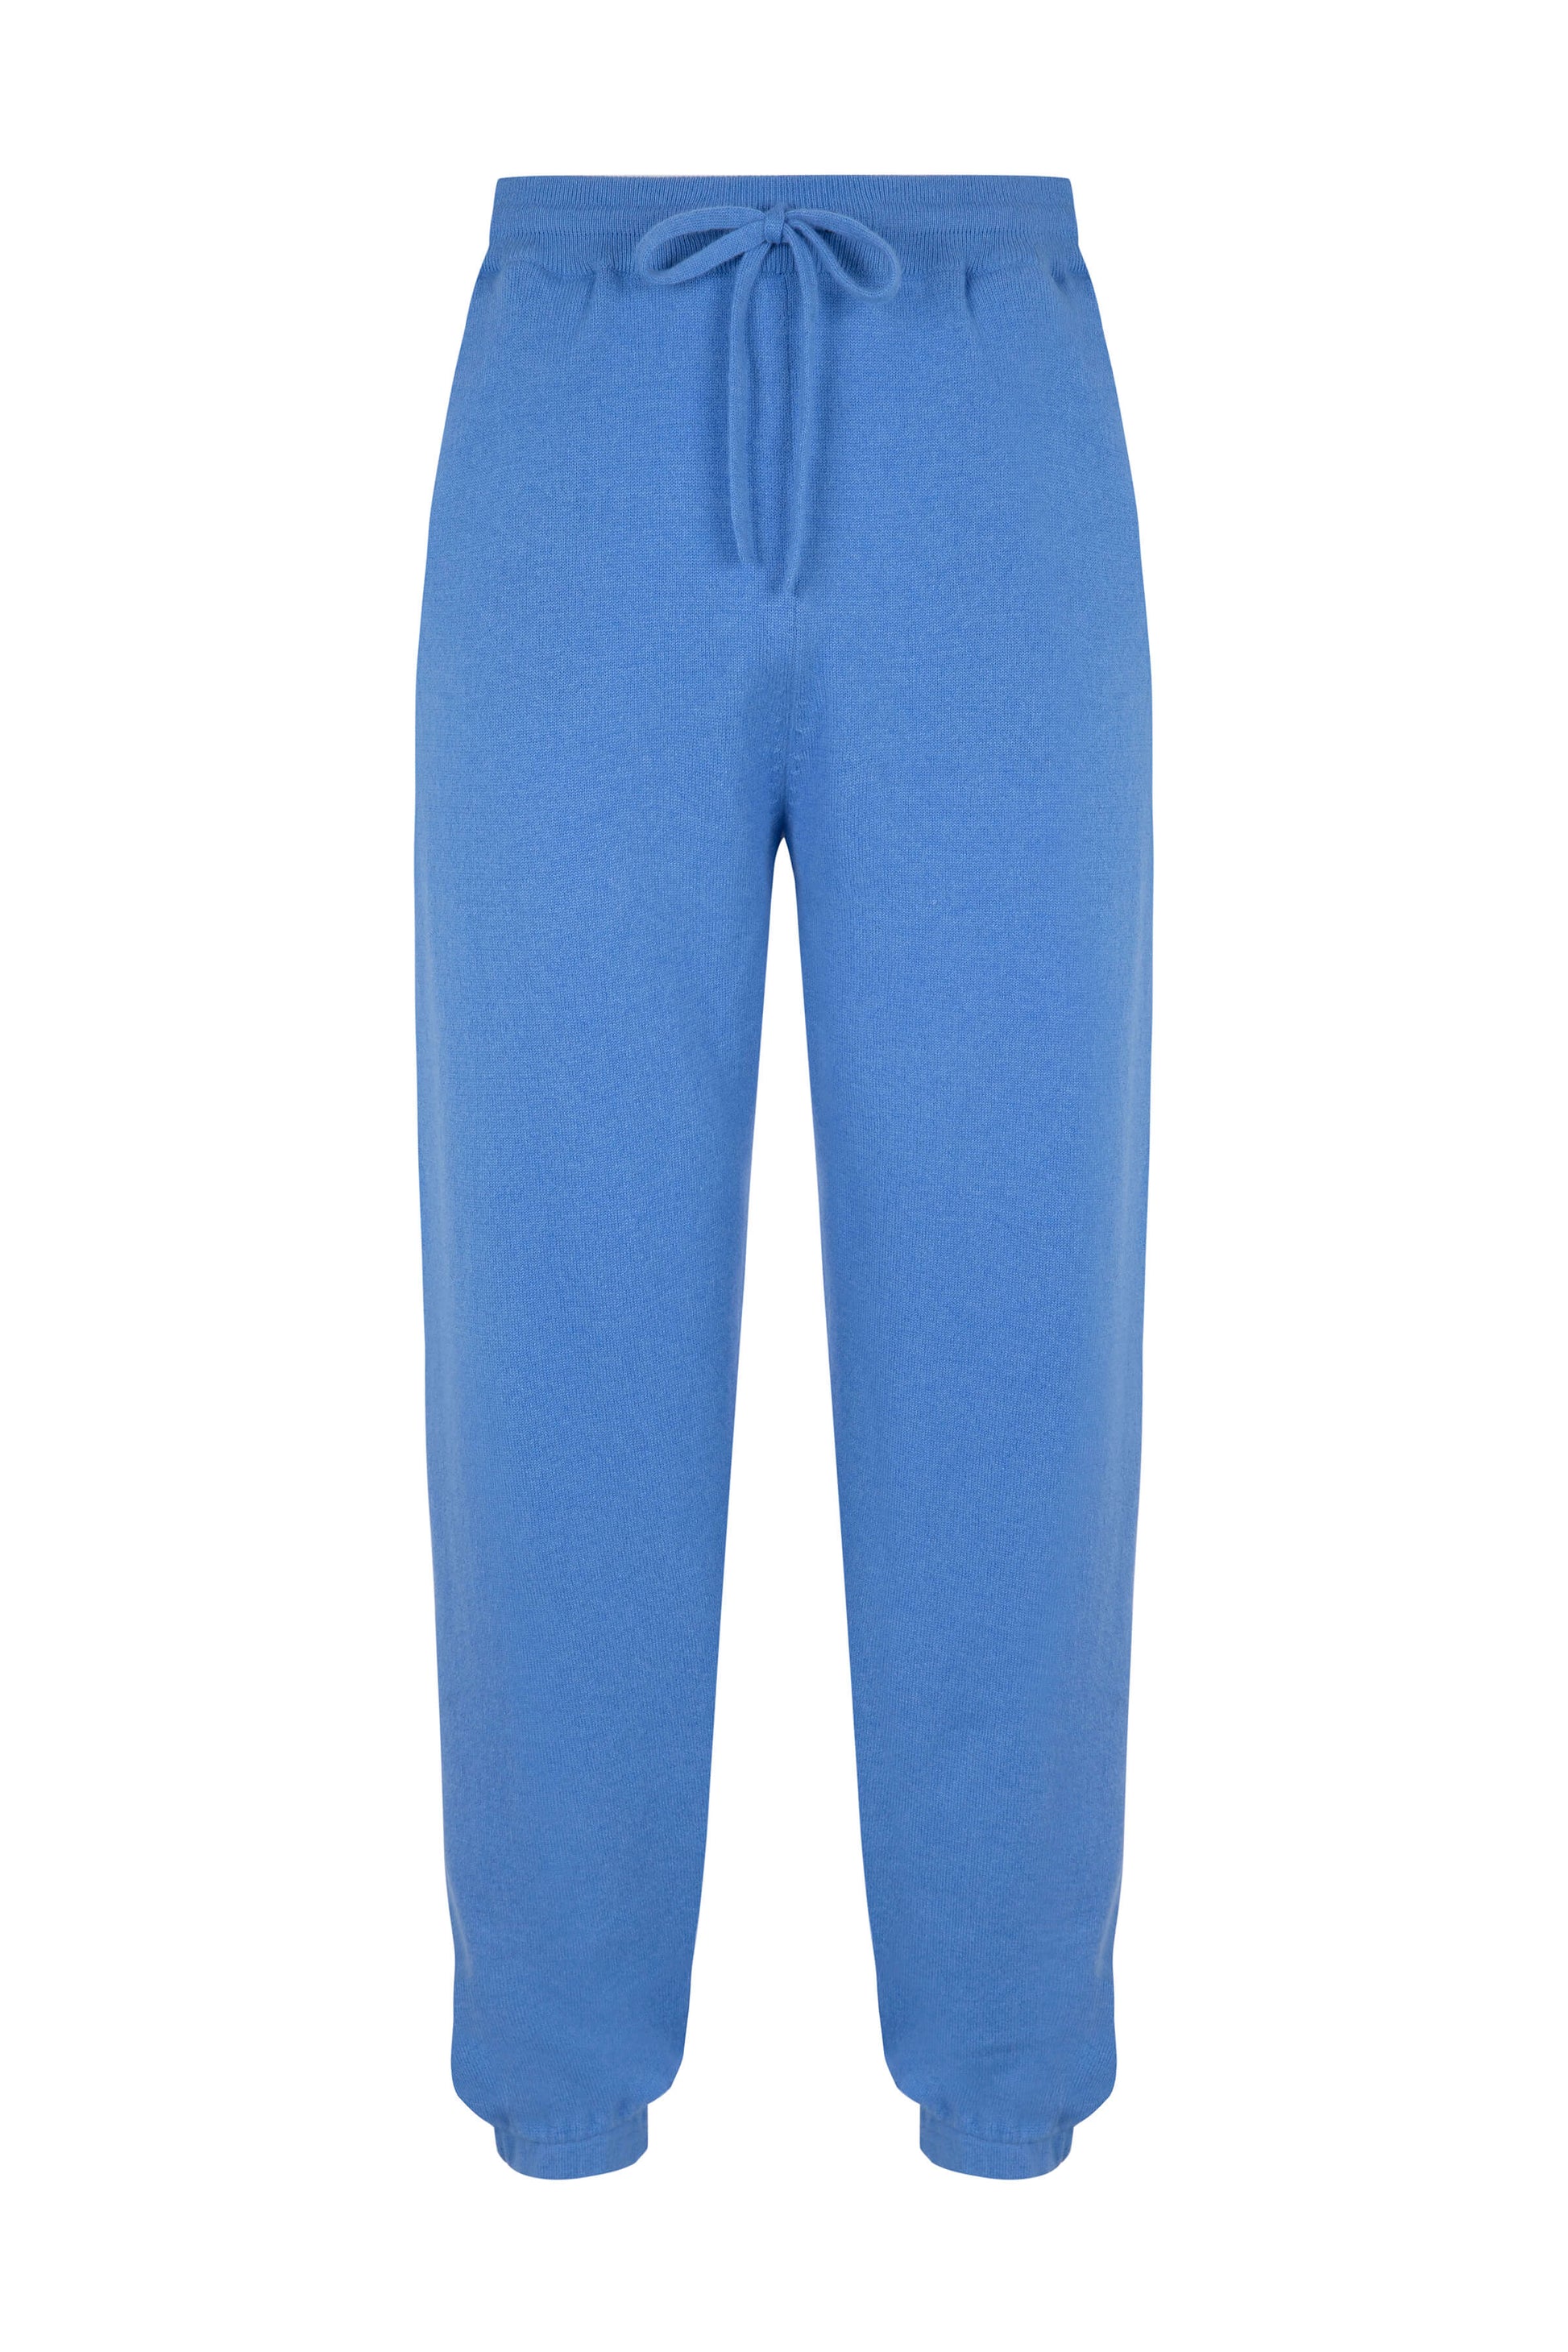 Johnstons of Elgin SS24 Men's Knitwear Skye Blue Performance Cashmere Cuffed Joggers KBP00948SD4950